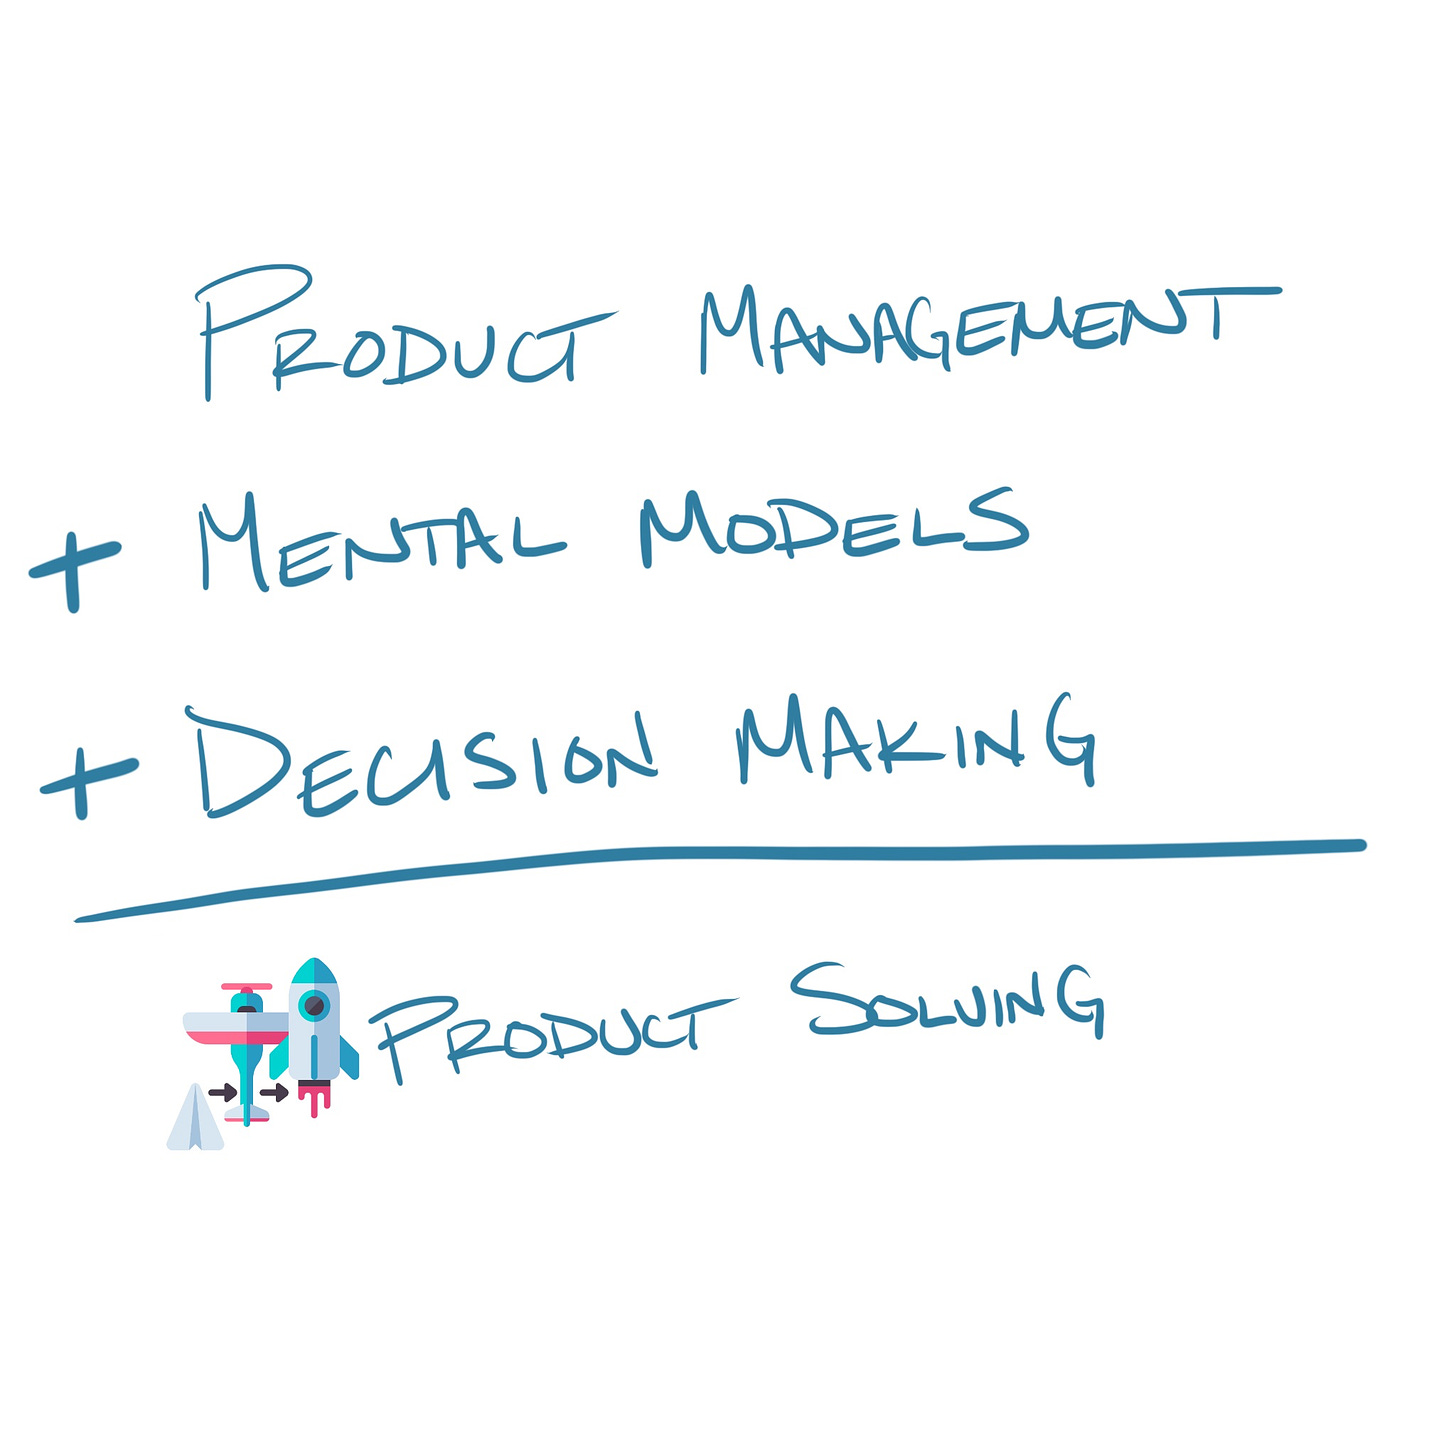 Product Management plus Mental Models plus Decision Making equals Product Solving